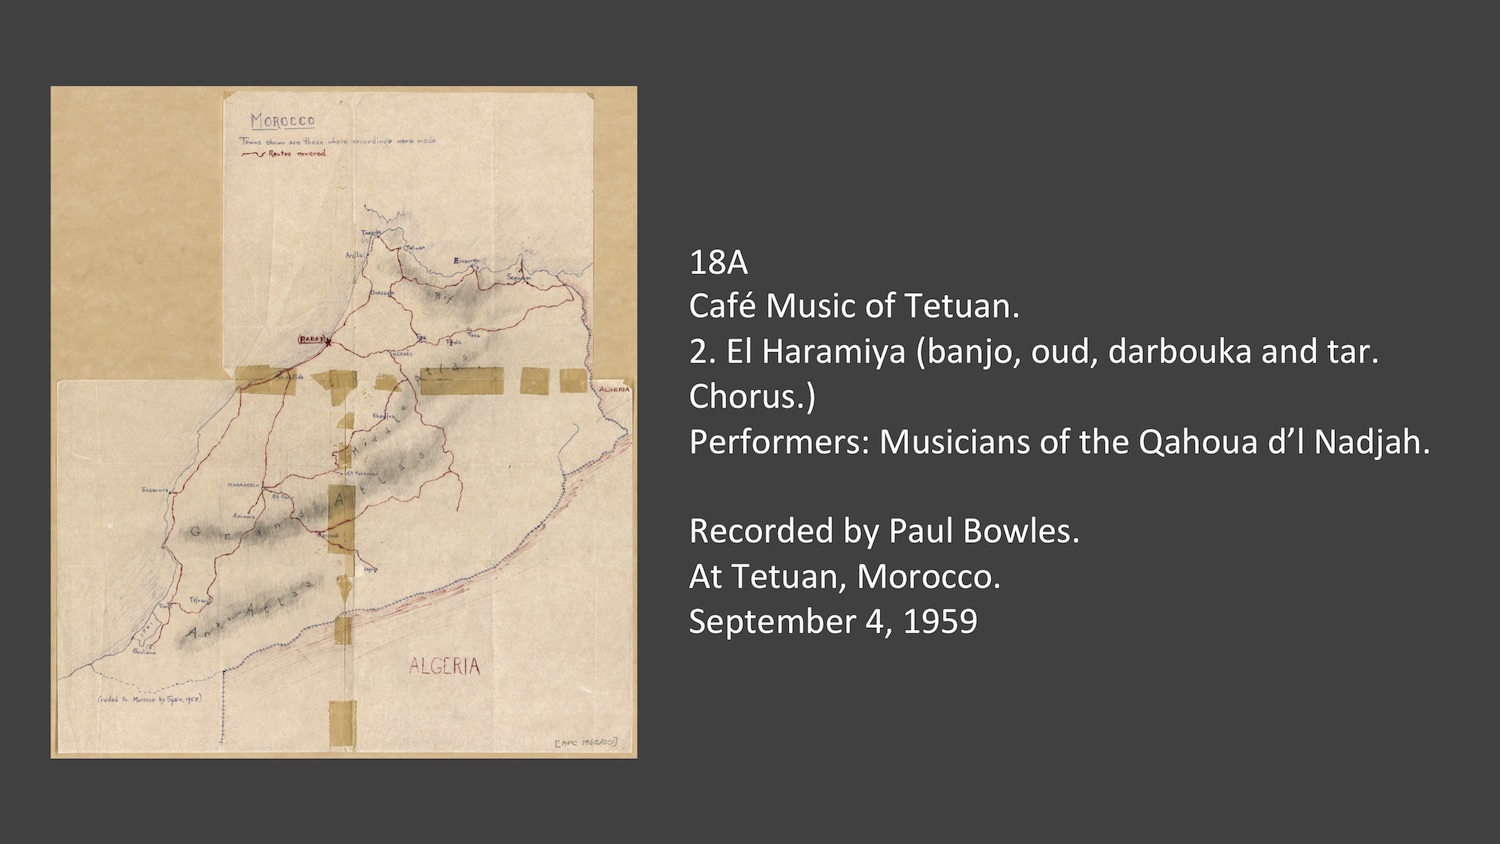 18A 2. El Haramiya
Café Music of Tetuan. 
(banjo, oud, darbouka and tar. Chorus.) 
Performers: Musicians of the Qahoua d’l Nadjah. 
